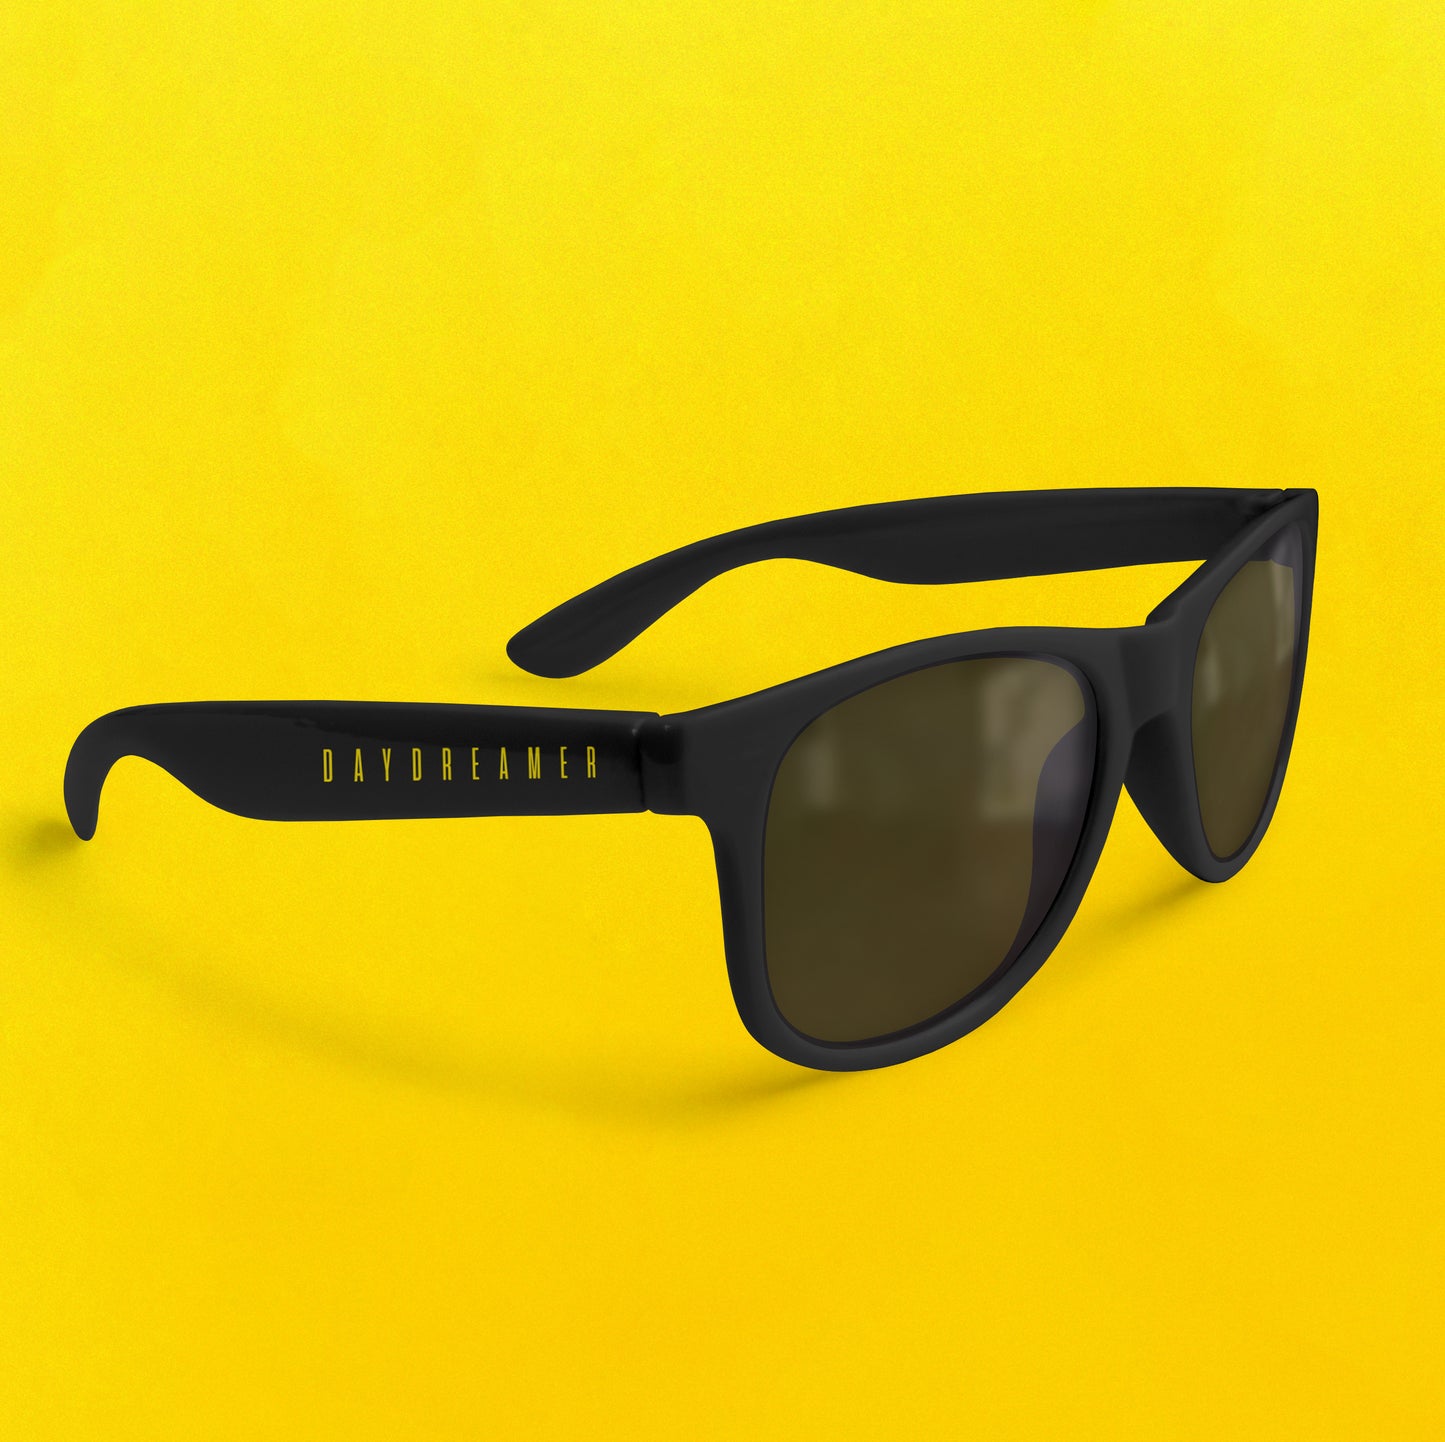 Daydreamer Sunglasses